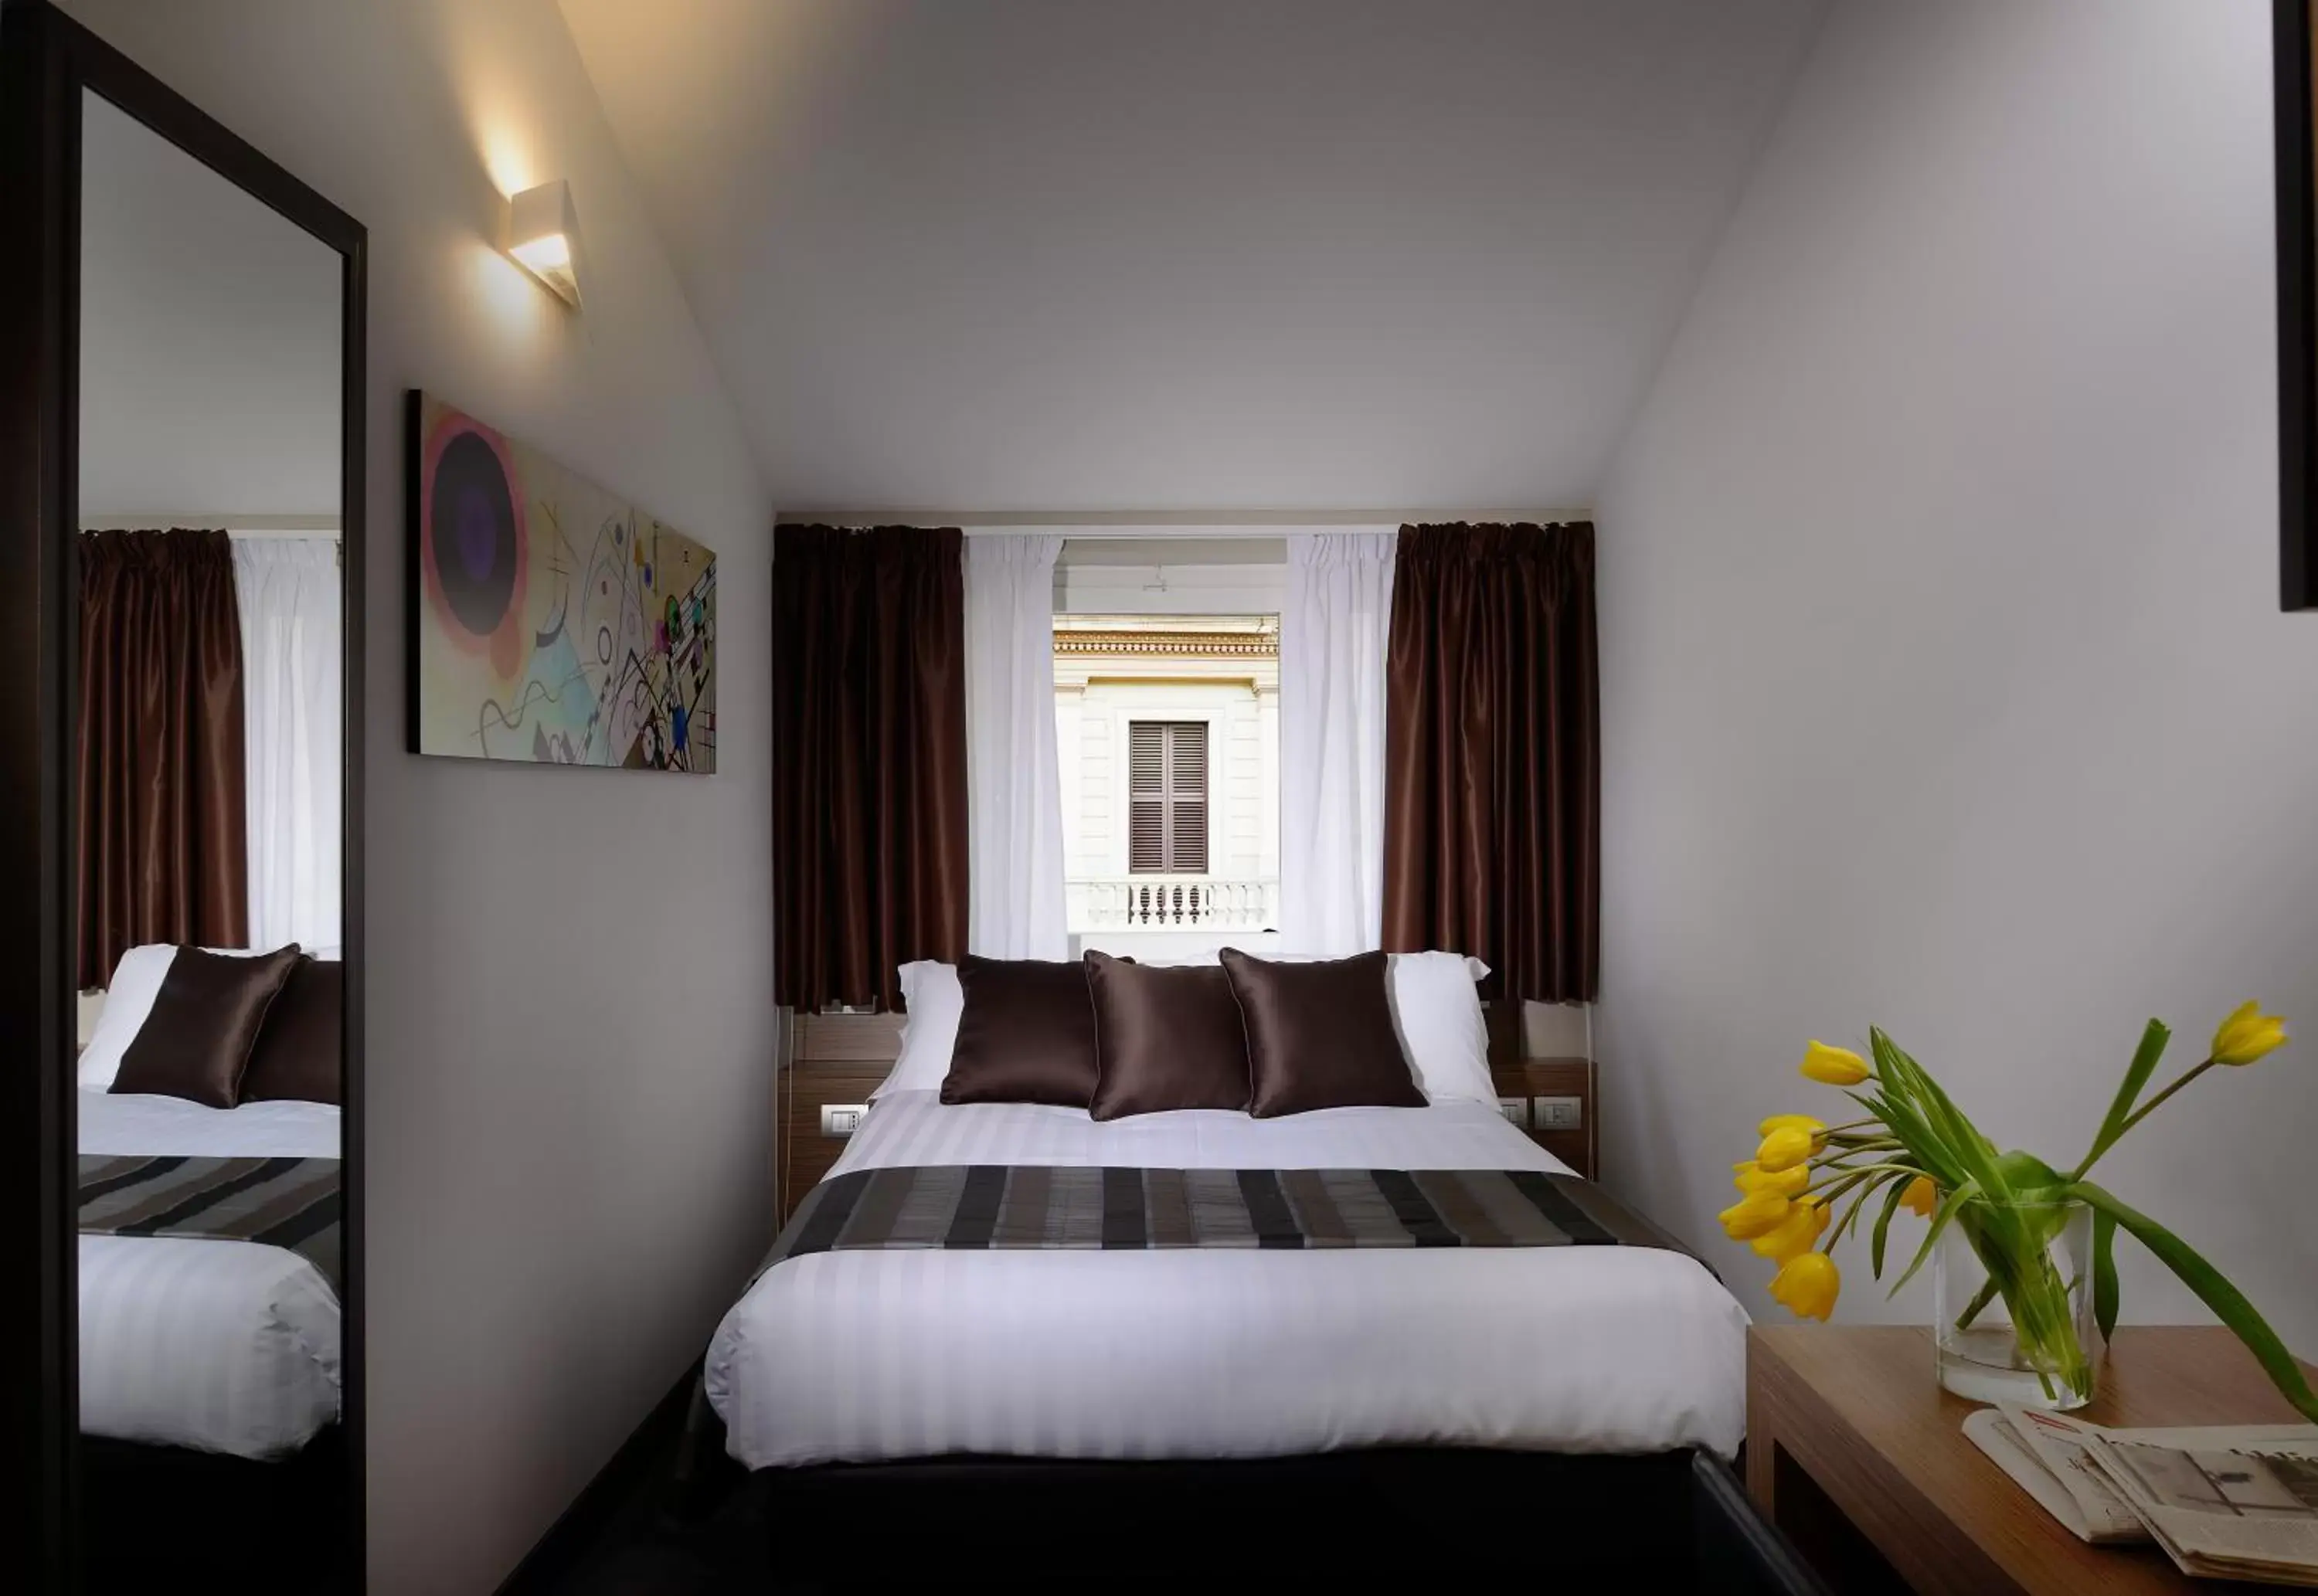 Bedroom, Bed in Rome Art Hotel - Gruppo Trevi Hotels